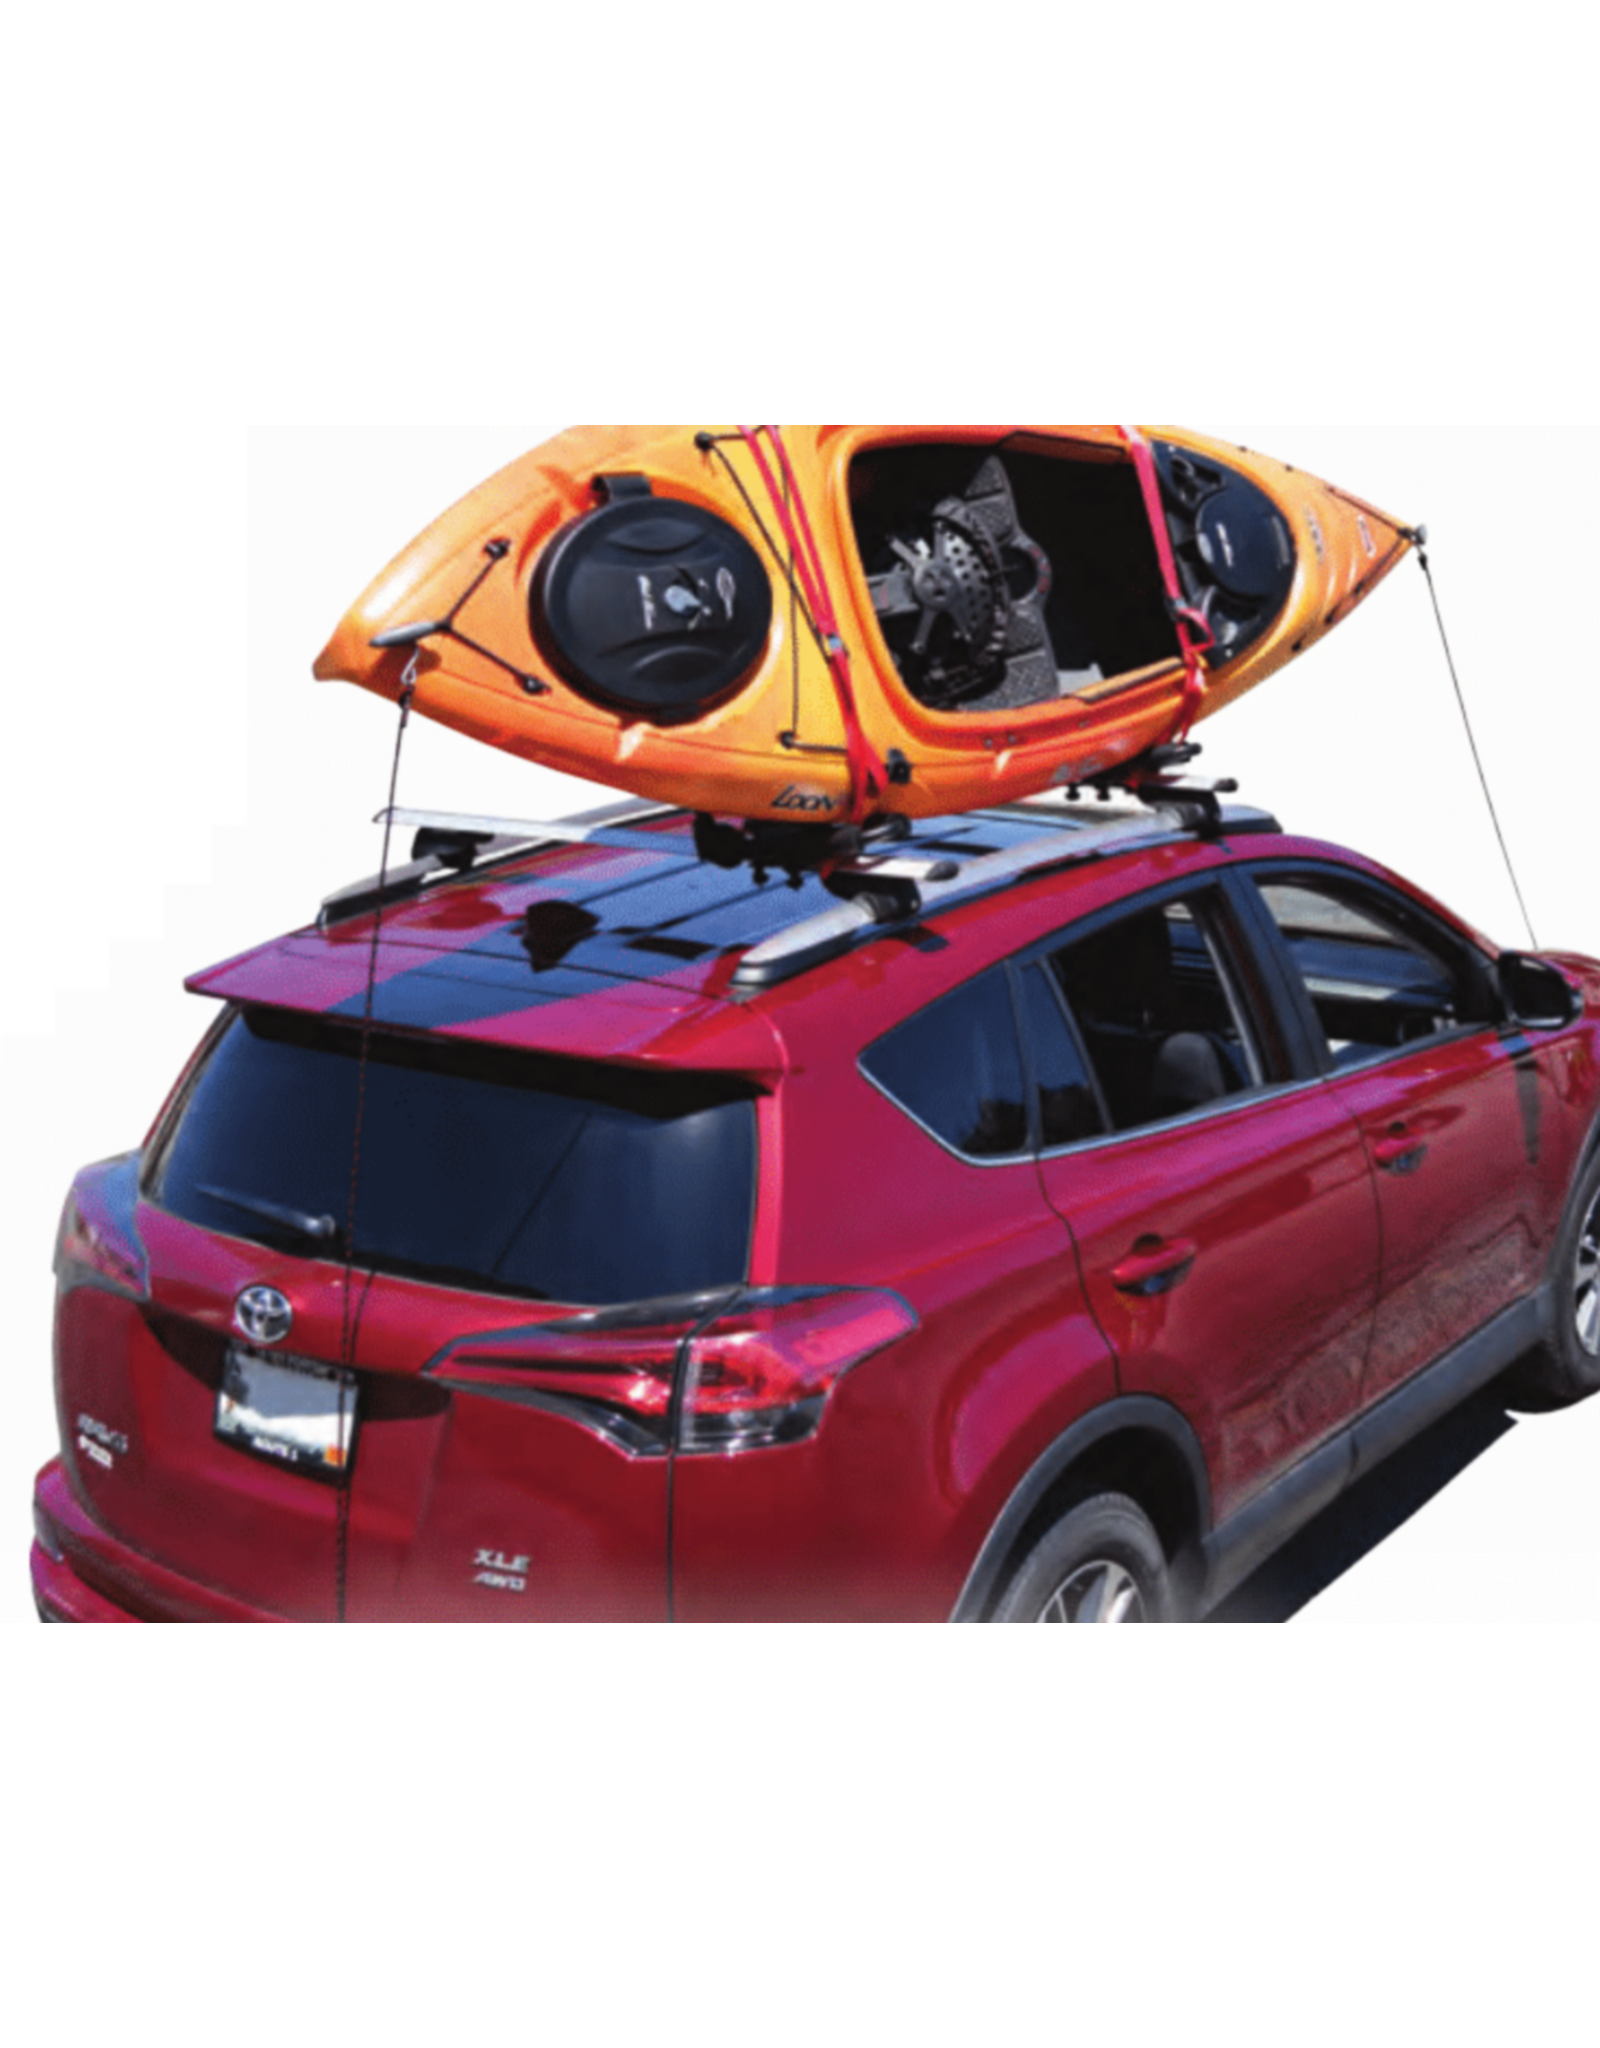 Malone Auto Rack Malone FoldAway-J™ Kayak Carrier with Tie-Downs